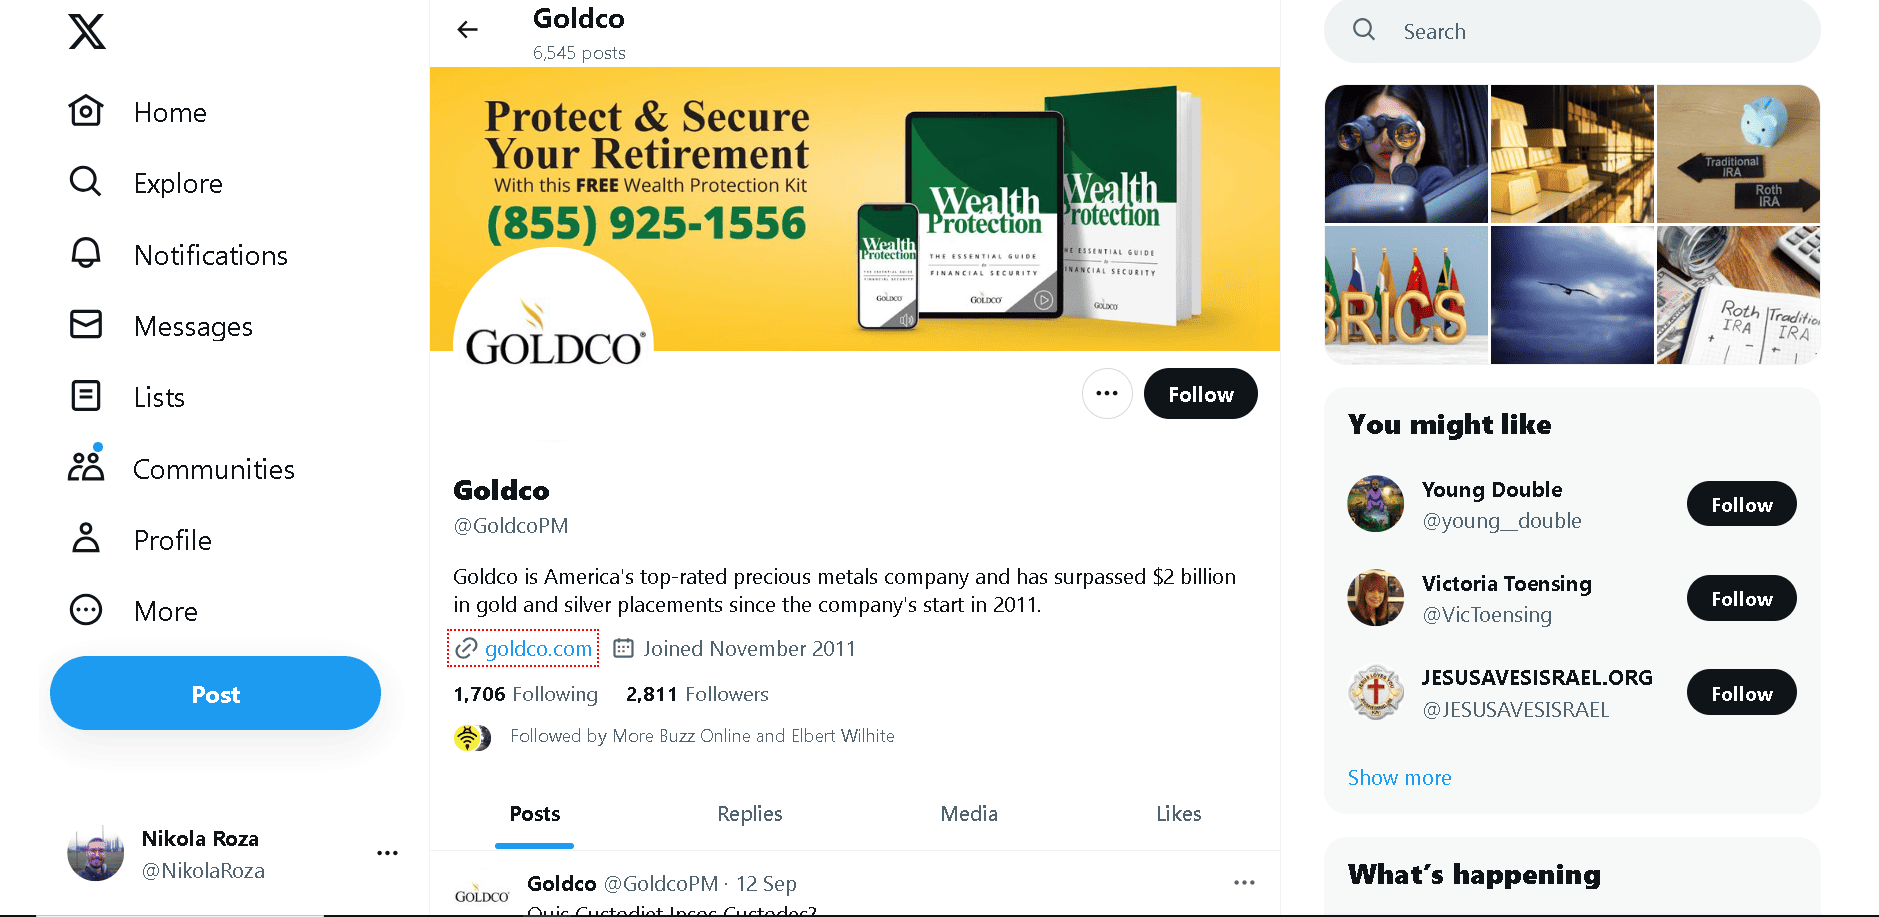 Goldco Twitter profile